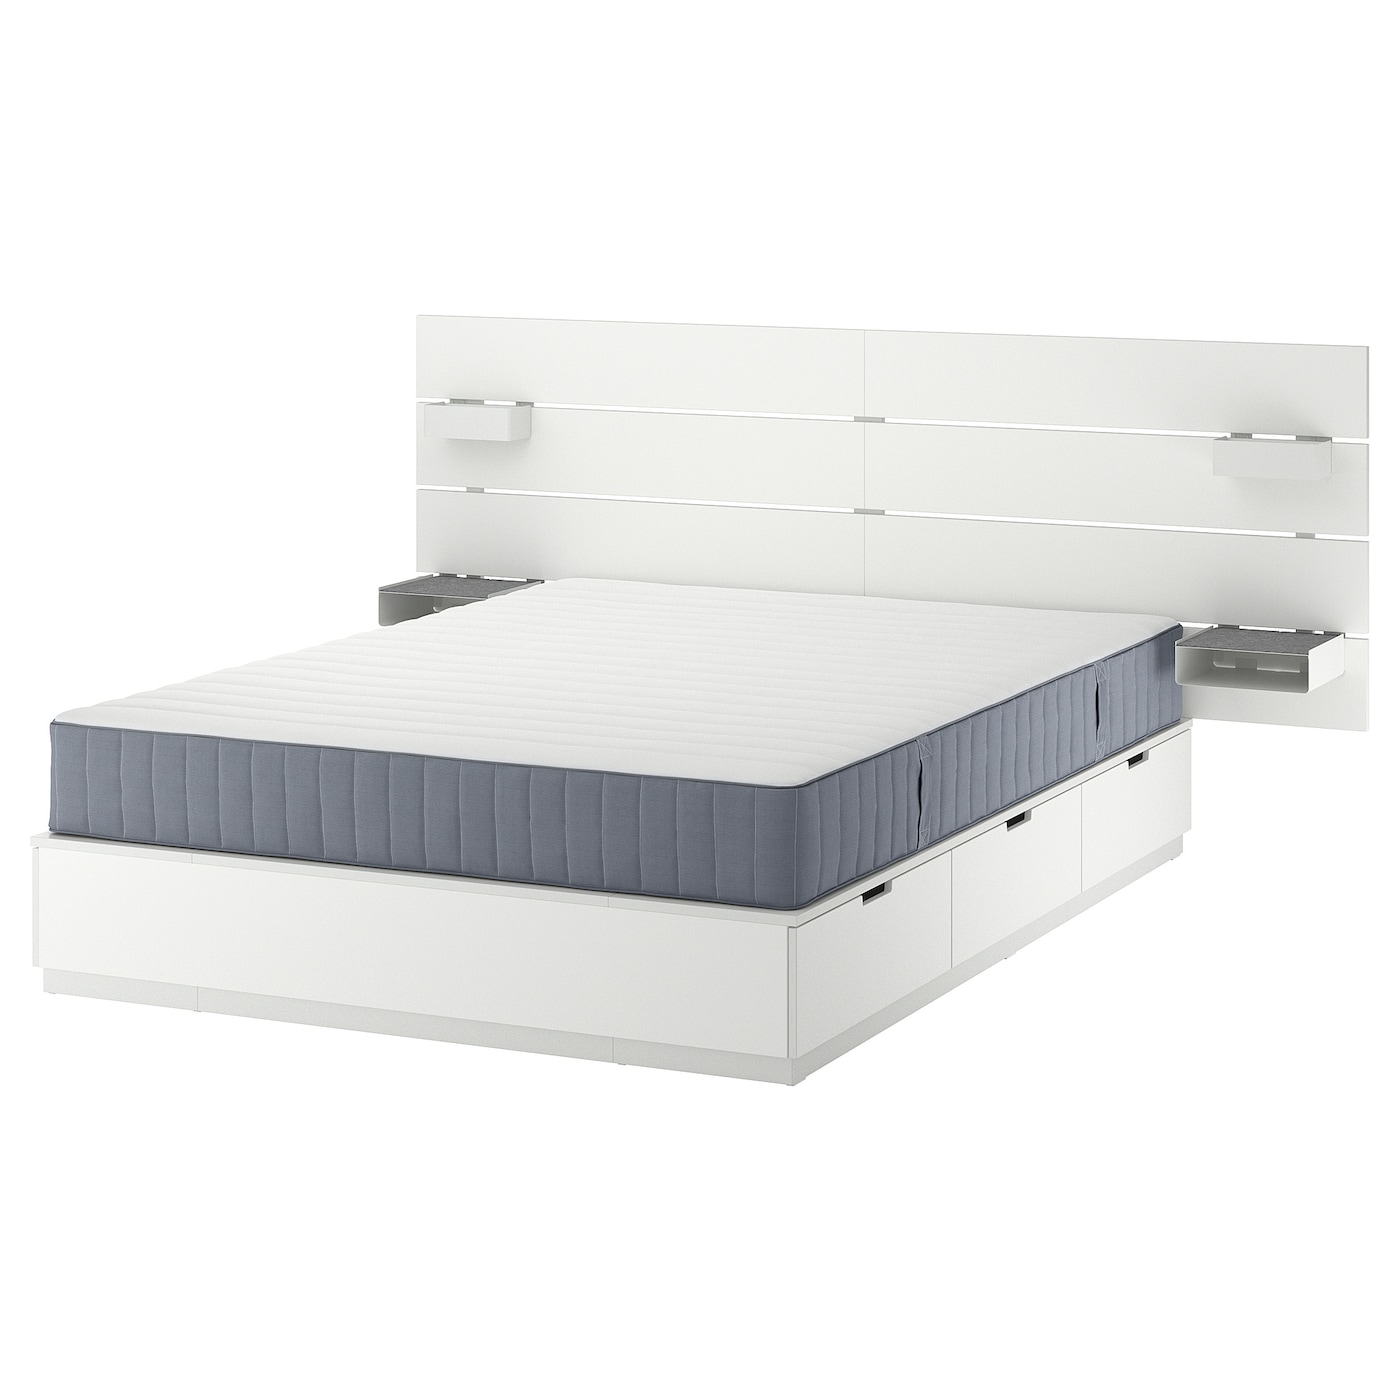 Каркас кровати с контейнером и матрасом - IKEA NORDLI, 140х200 см, жесткий матрас, белый, НОРДЛИ ИКЕА